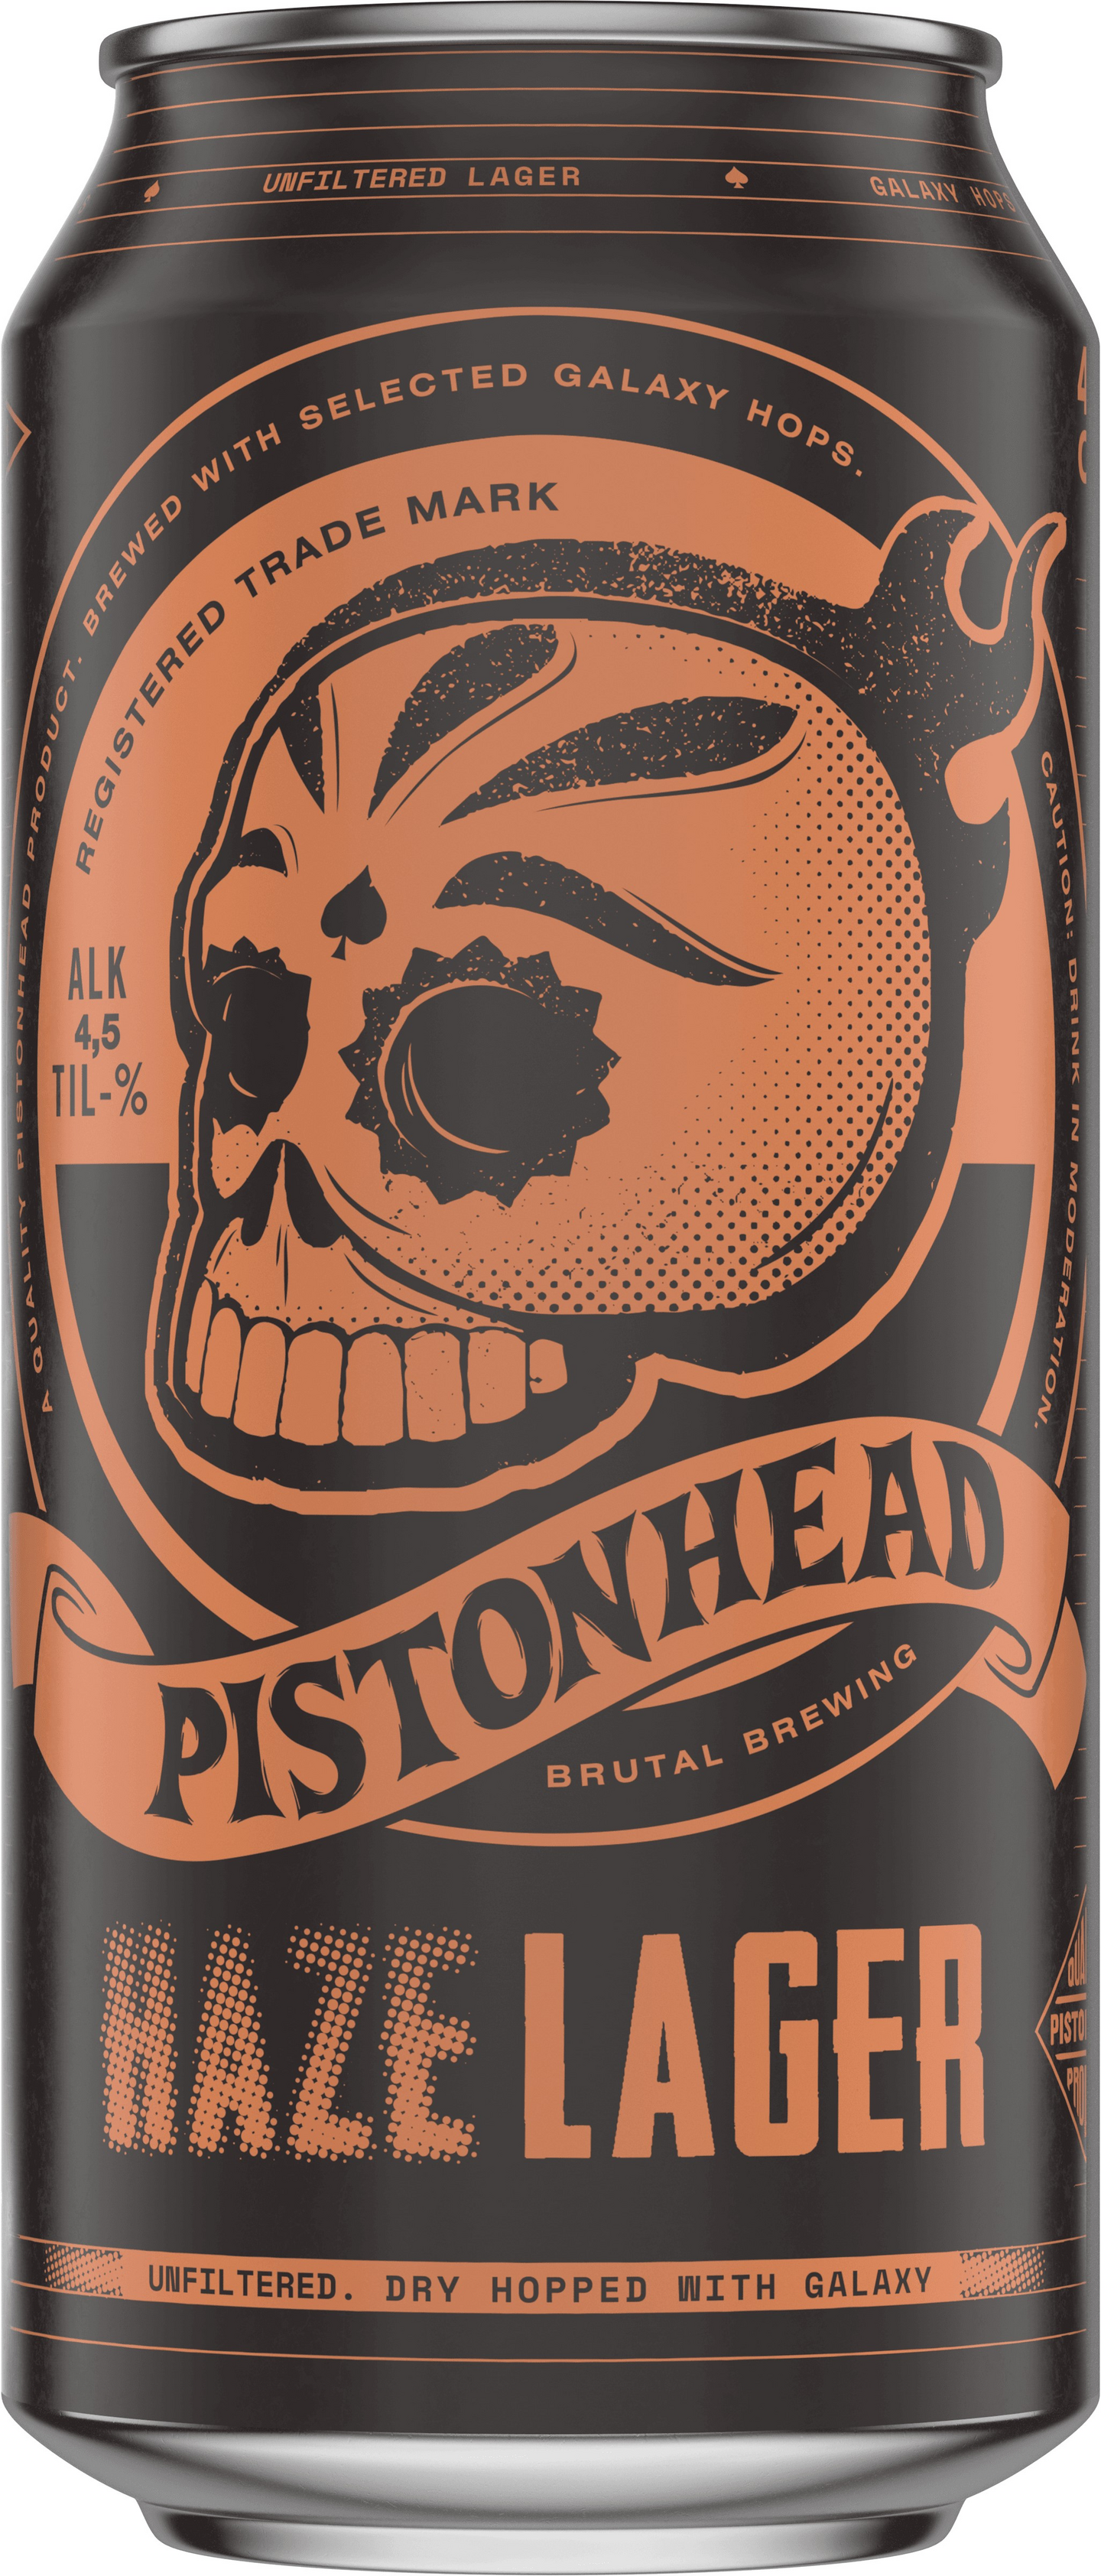 Pistonhead Haze Lager olut 4,5% 0,44l